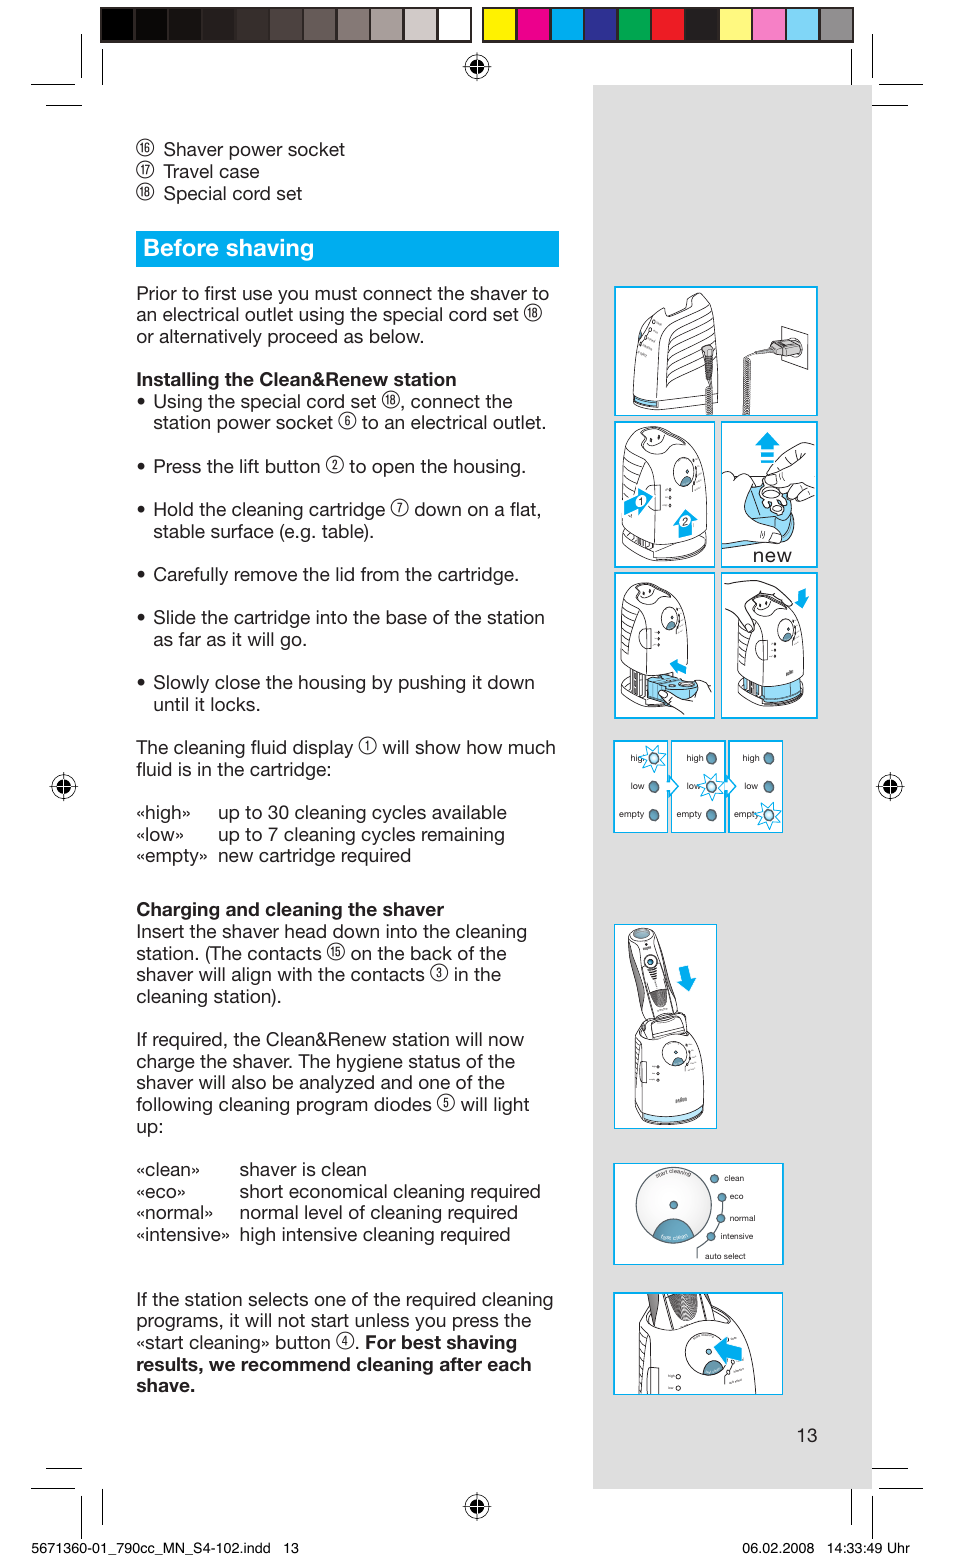 Before shaving, Shaver power socket, Travel case | Braun 790cc-5671 Series 7  User Manual | Page 13 / 101 | Original mode